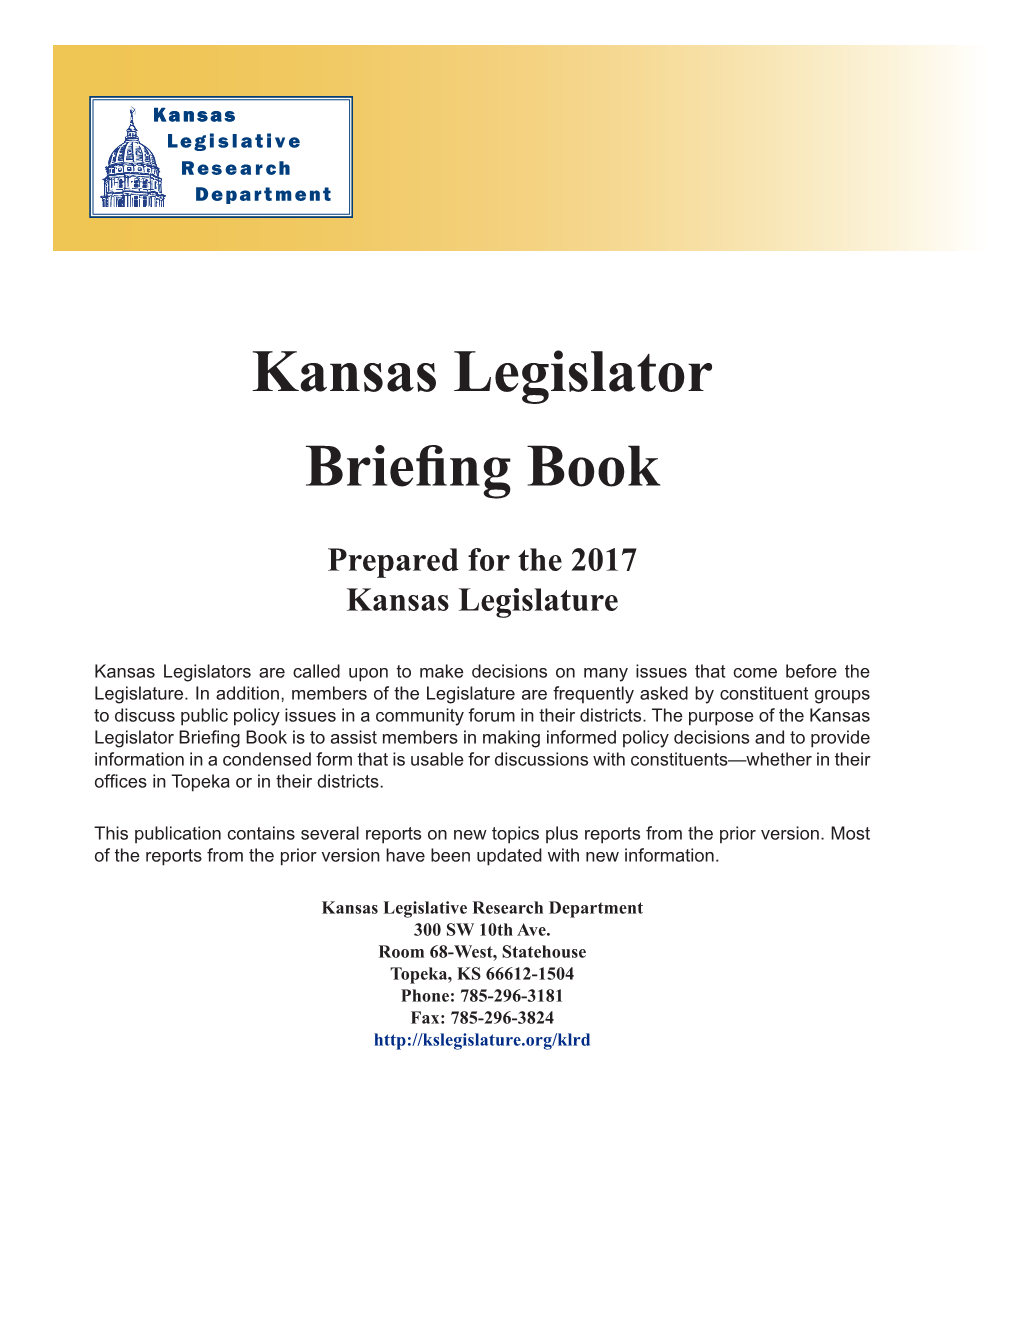 Kansas Legislator Briefing Book 2017